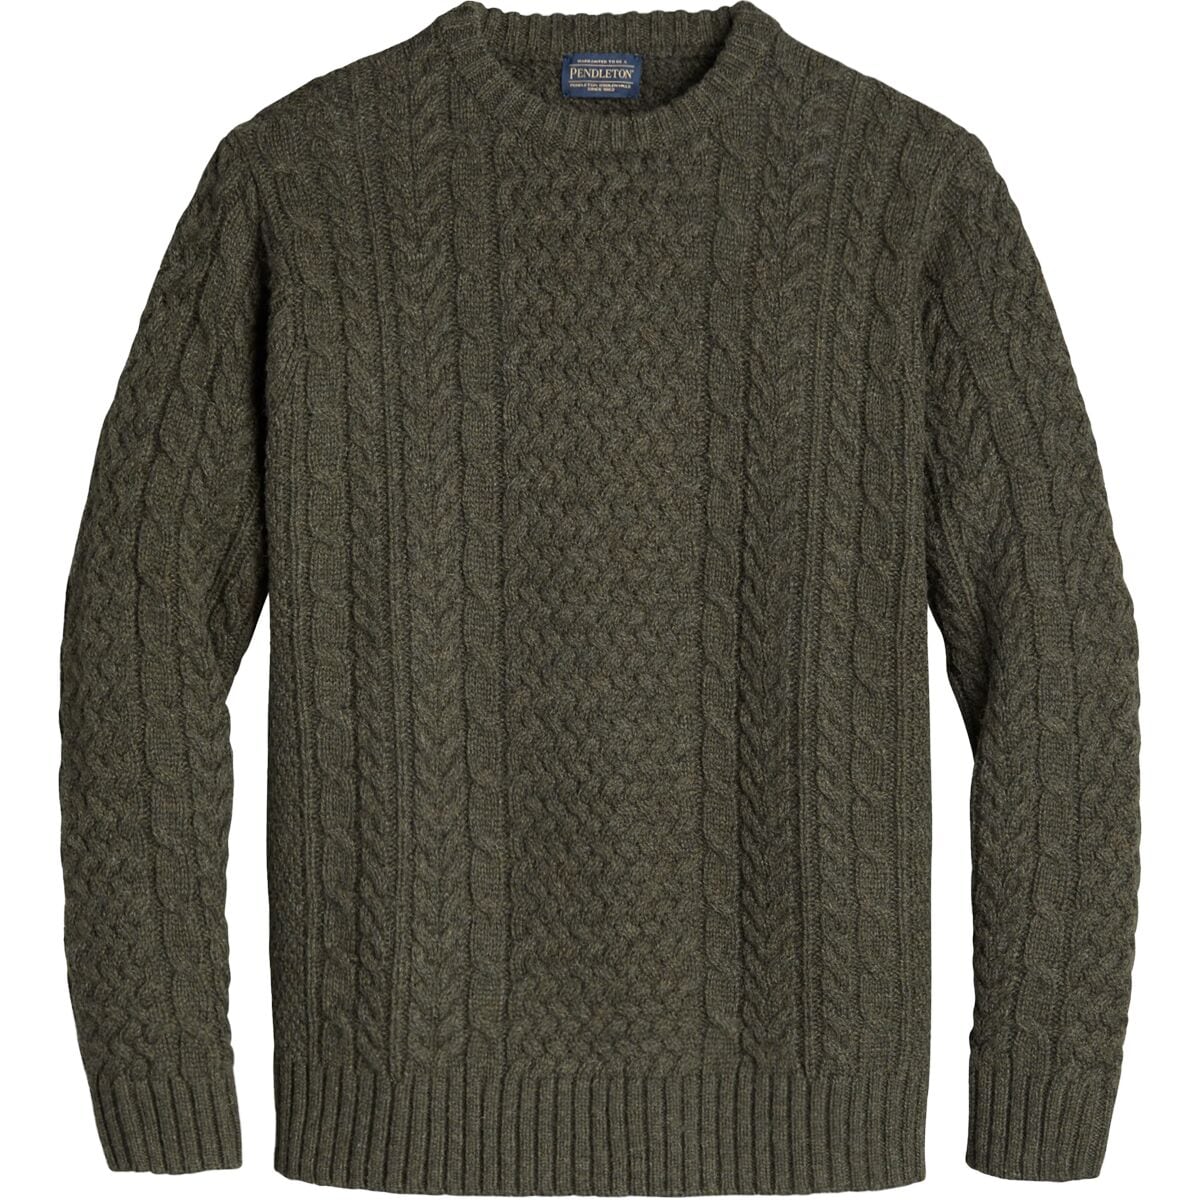 Shetland Fisherman Sweater - Men